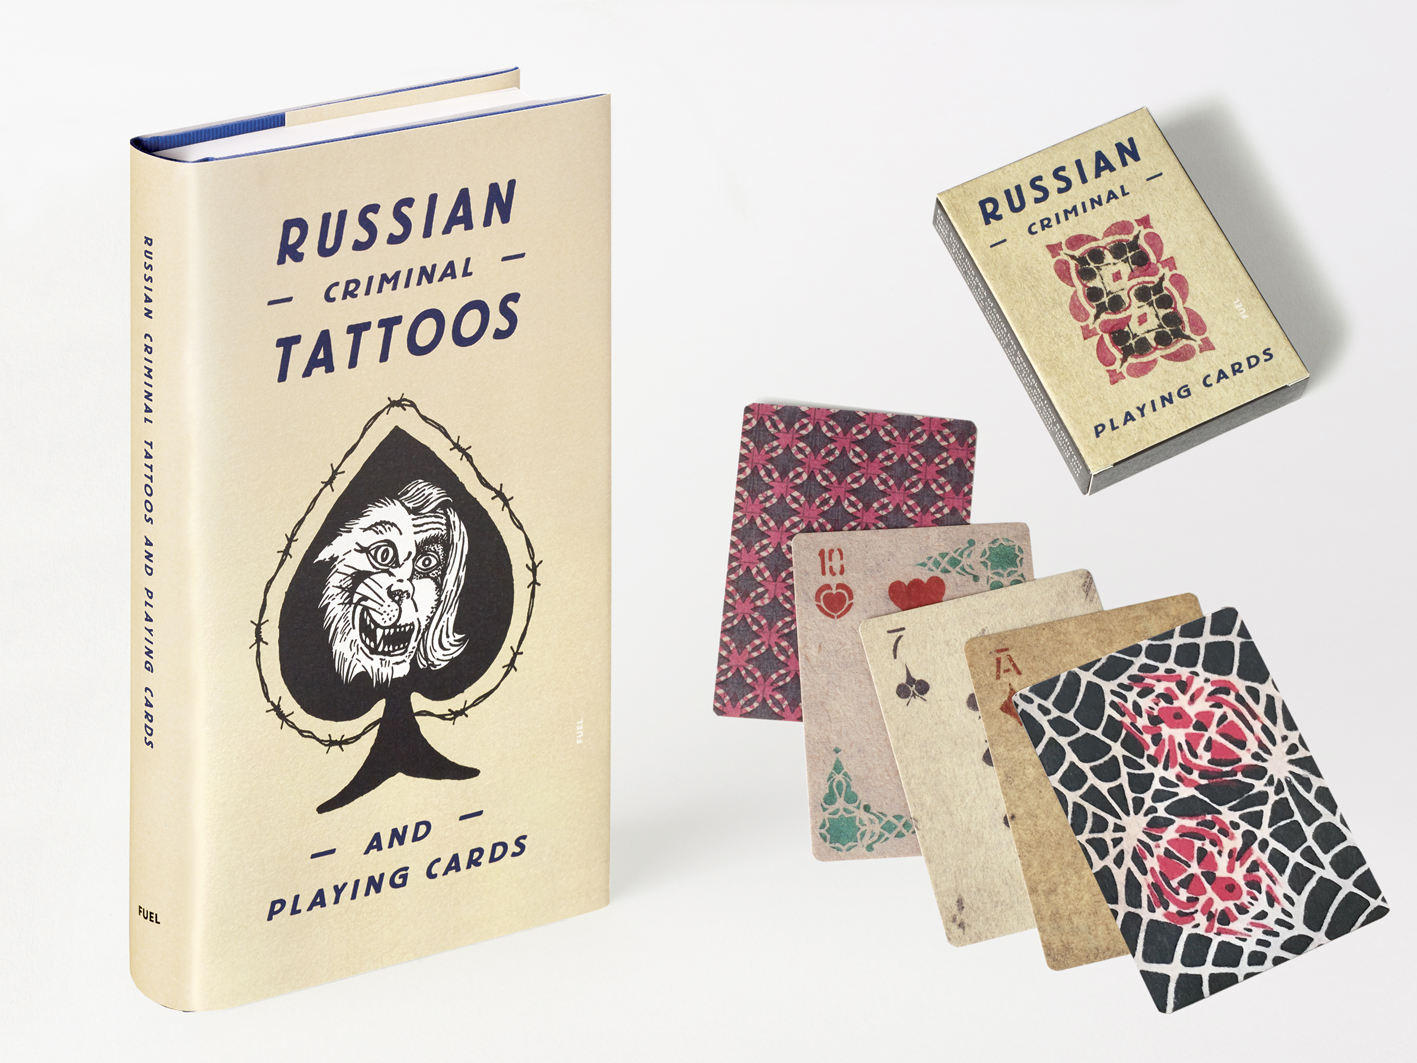 Russian Criminal Tattoo Encyclopedia